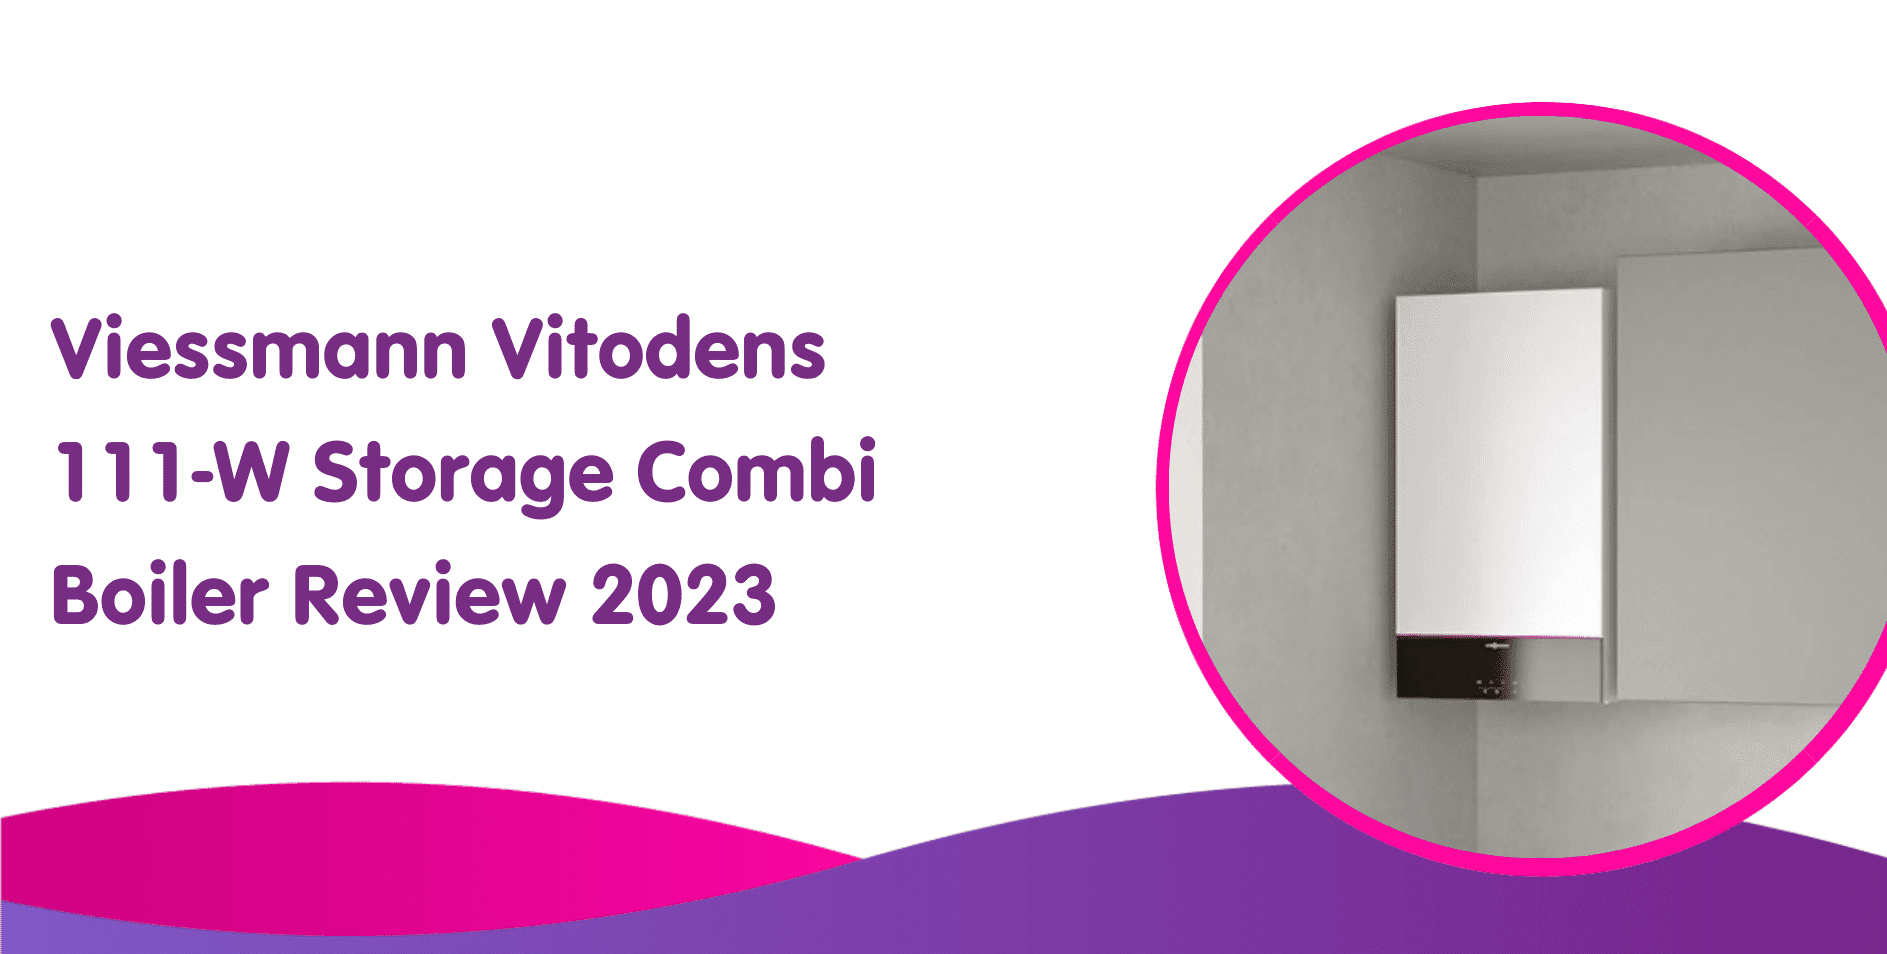 Viessmann Vitodens 111-W Storage Combi Boiler Review 2023